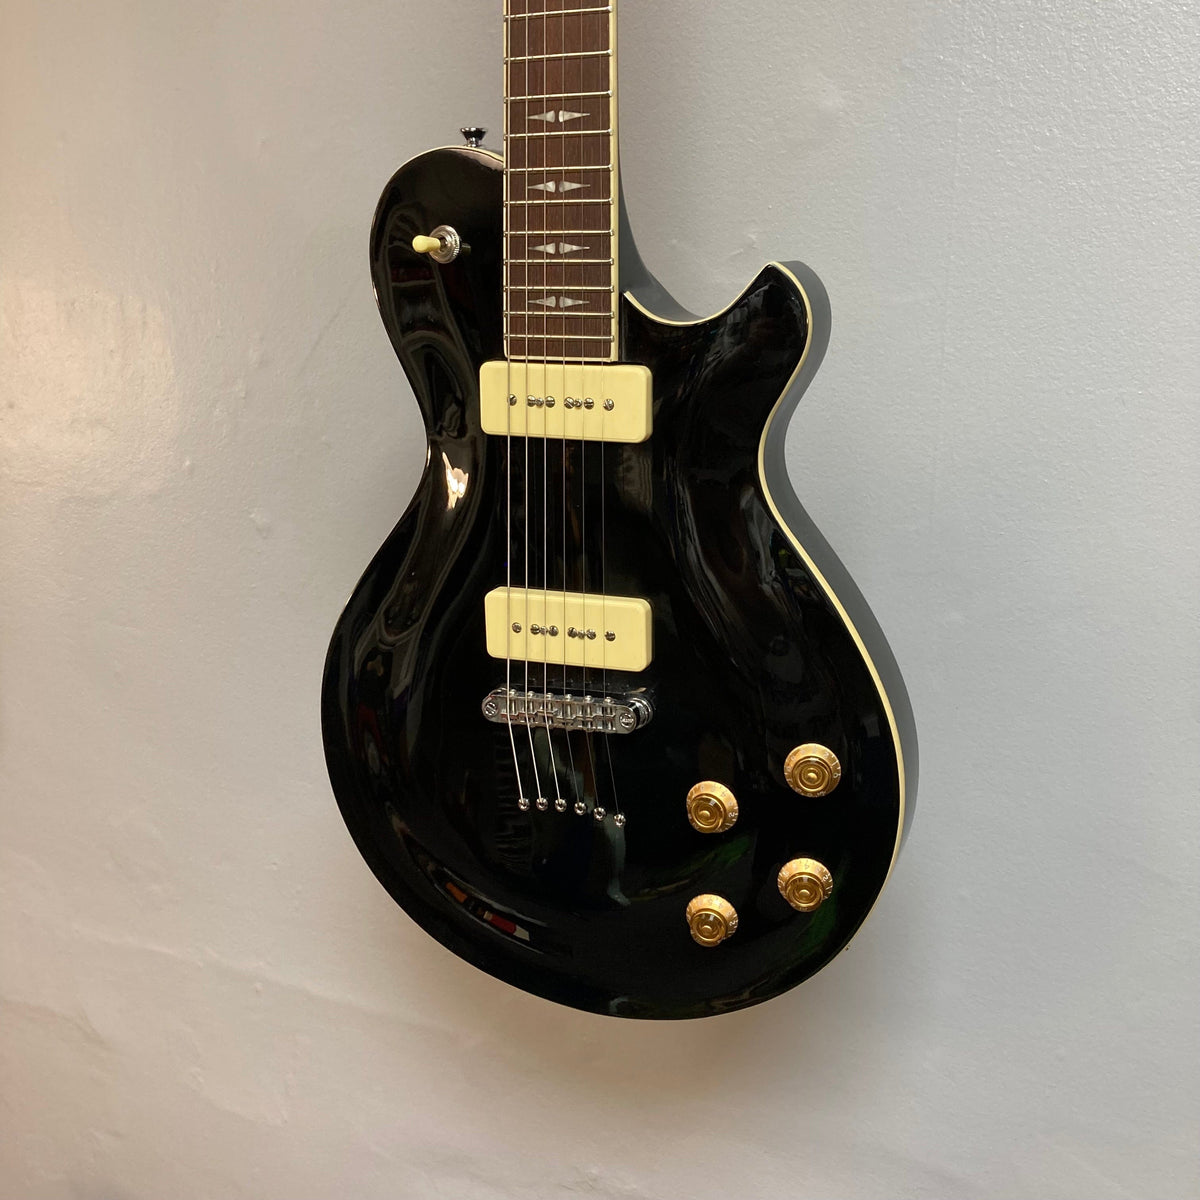 Michael Kelly Patriot P90 Gloss Black Prototype Guitars...